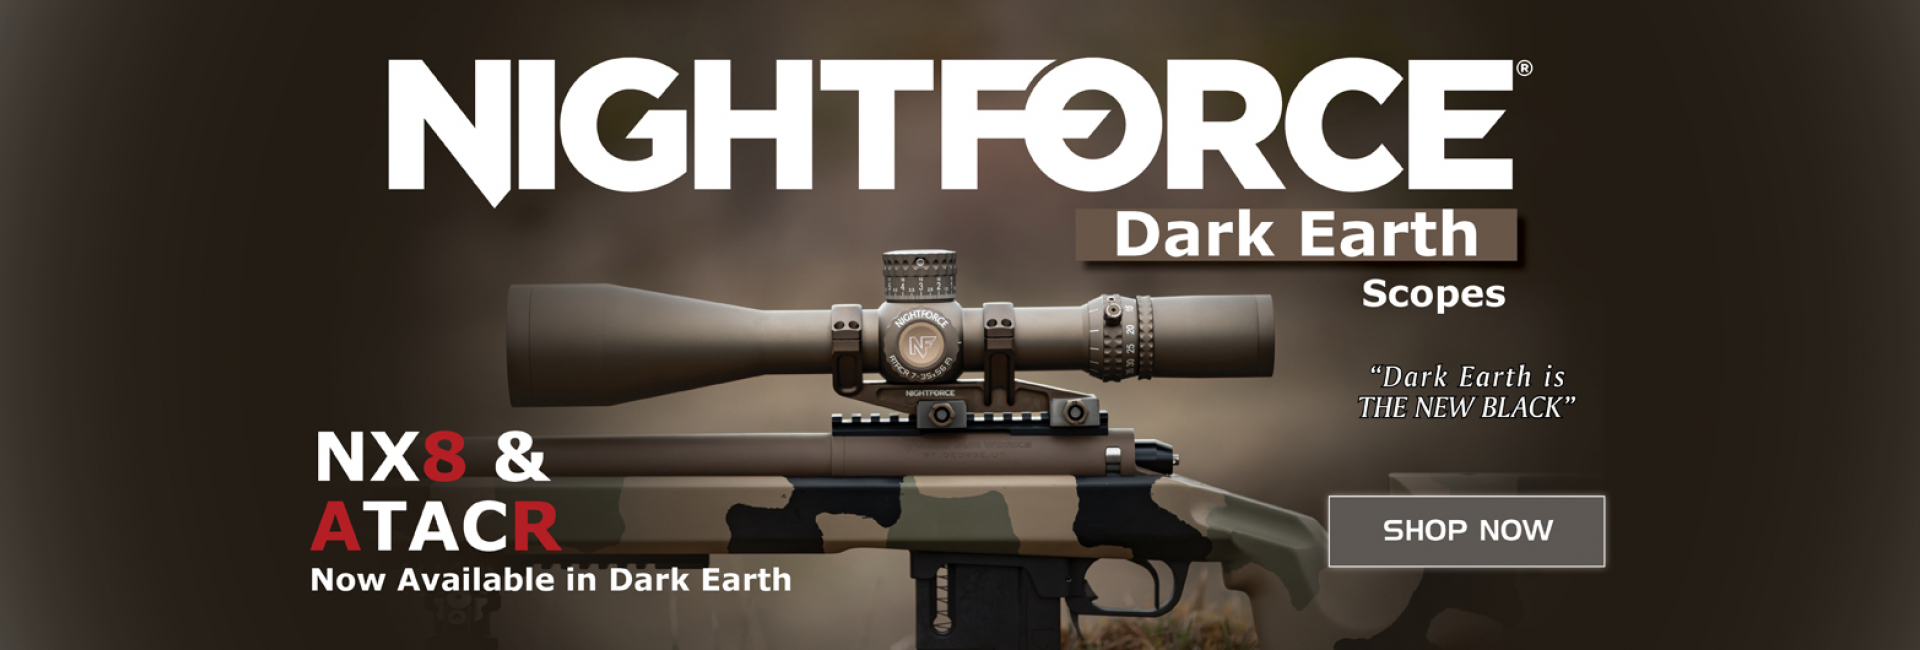 Nightforce Dark Earth Banner